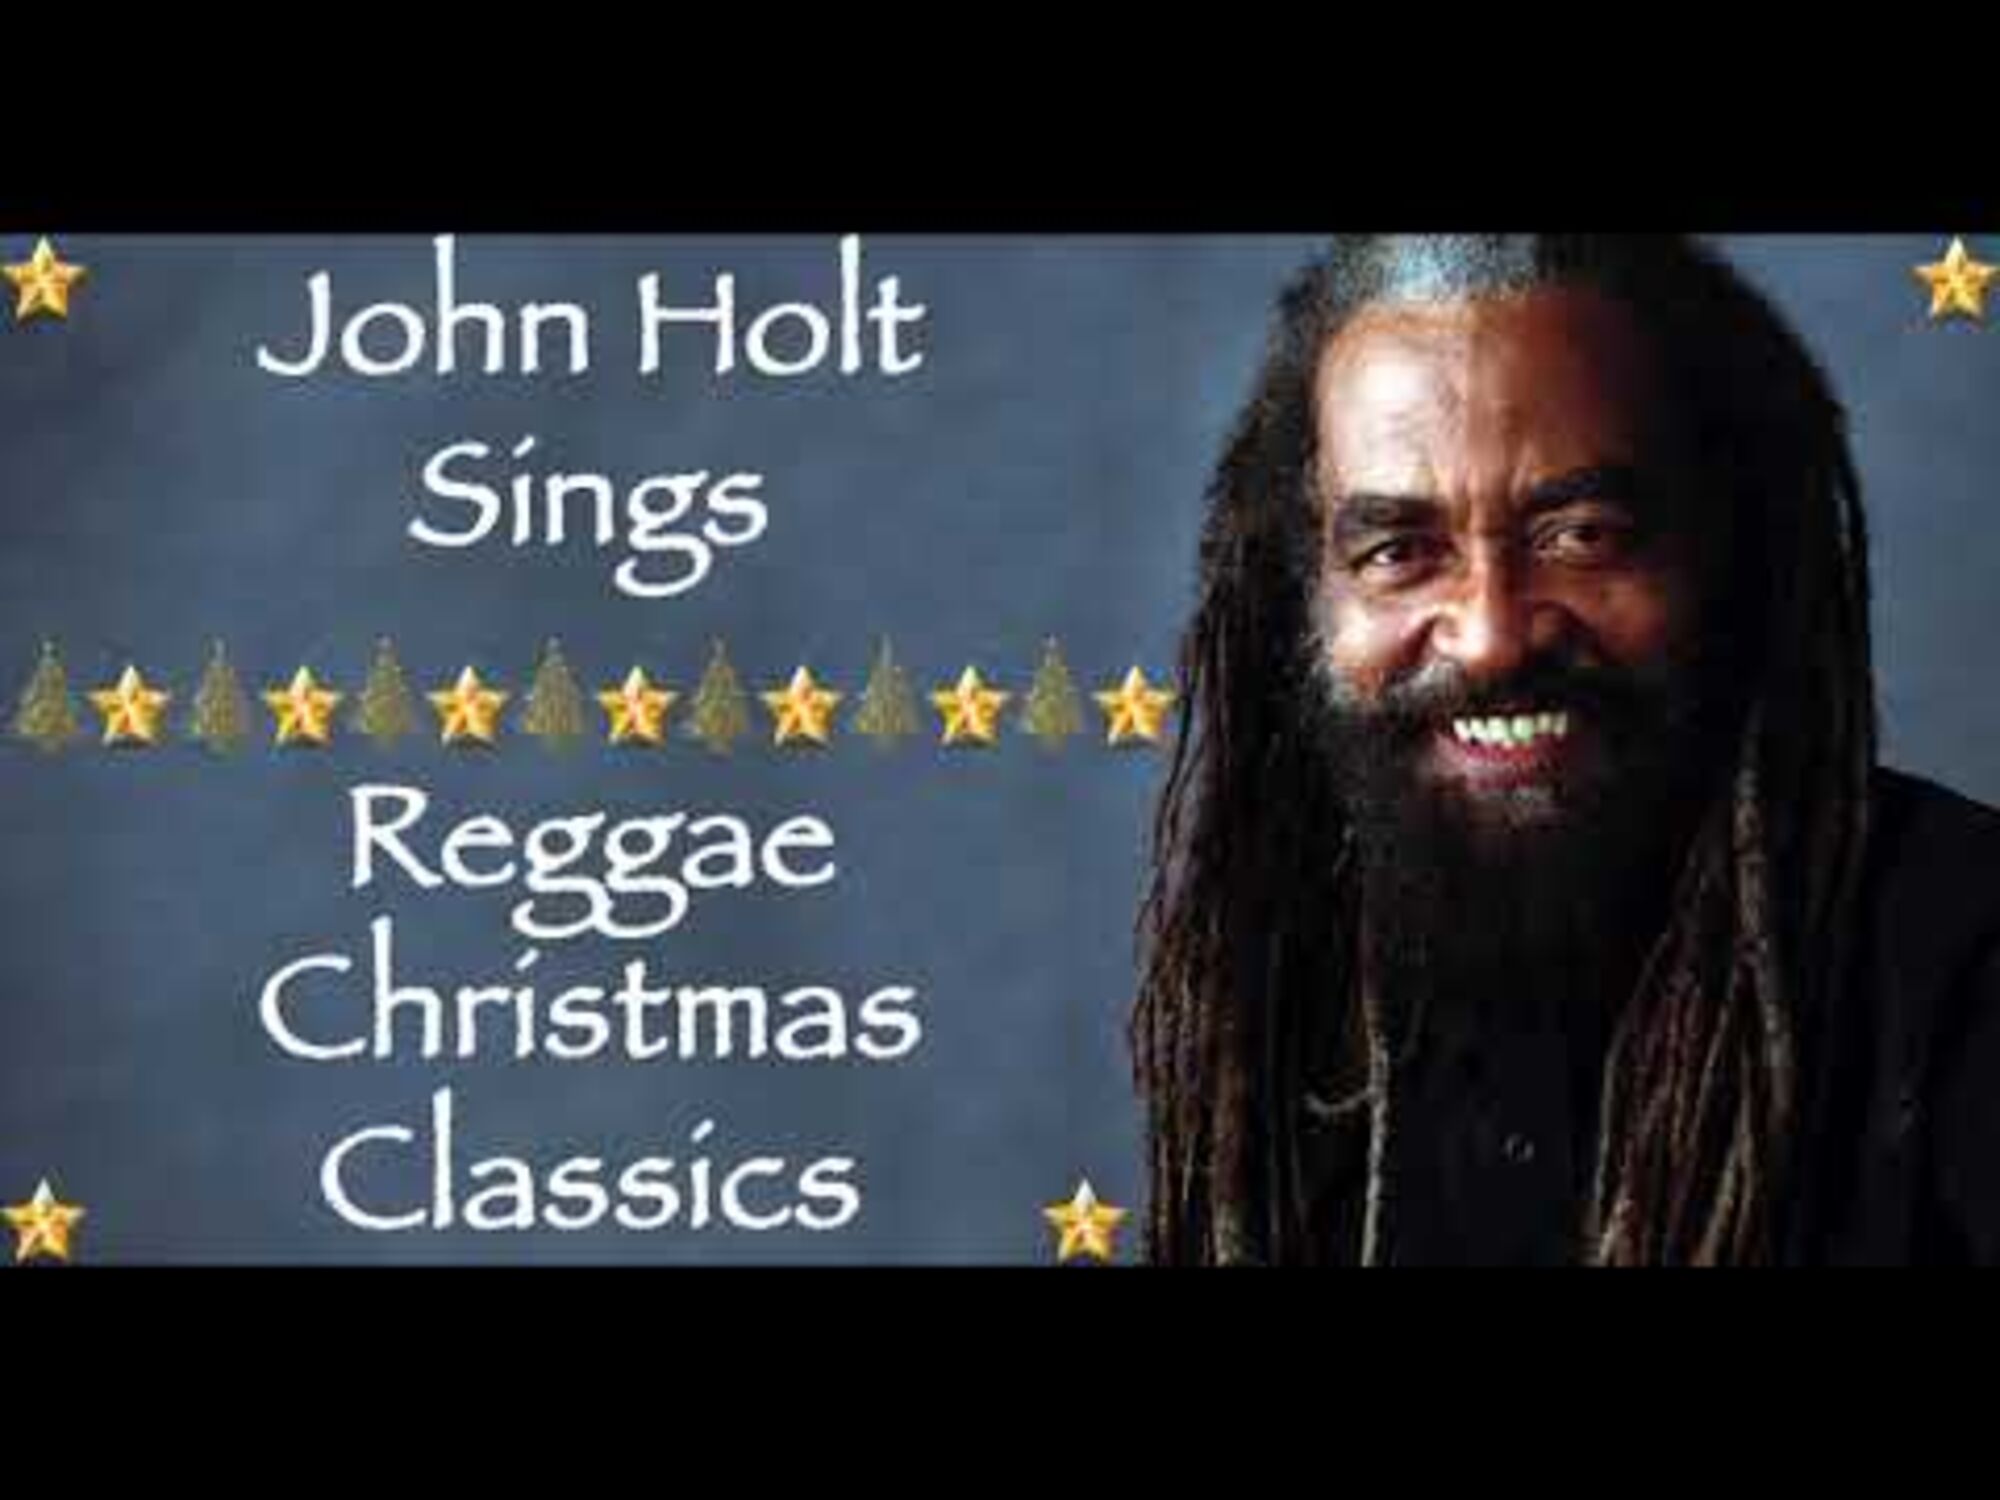 Christmas Songs We Love || John Holt Sings Reggae Christmas Classics / Merry Christmas 2018